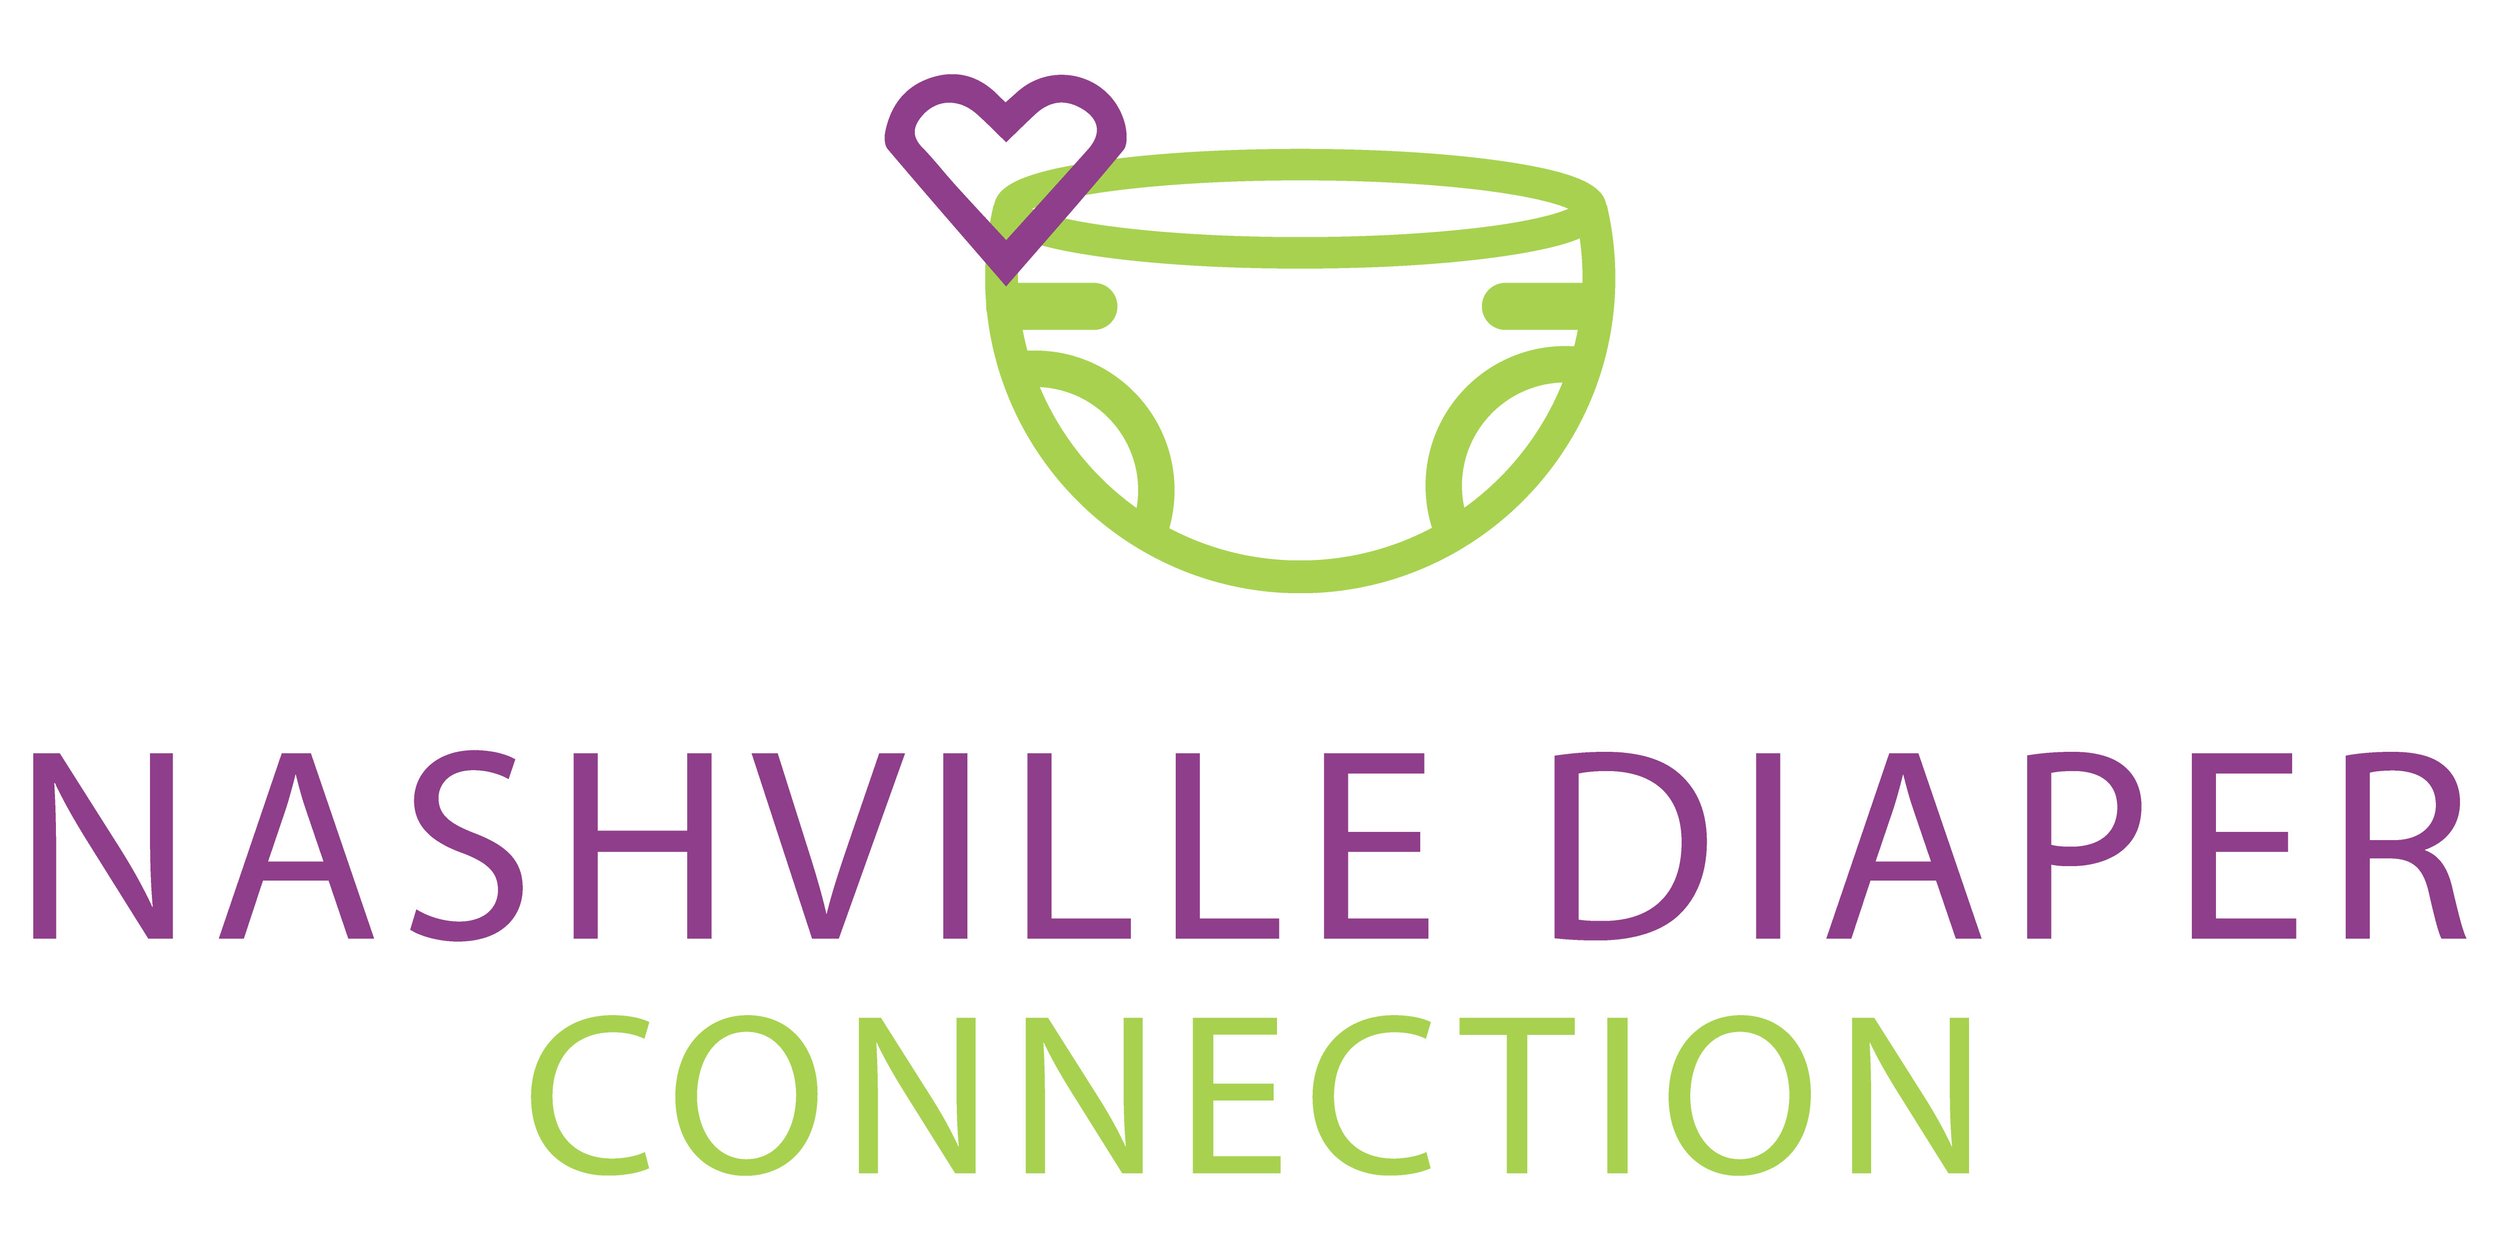 Nashville_Diaper_Connection_Logo_8-24-2020.jpg